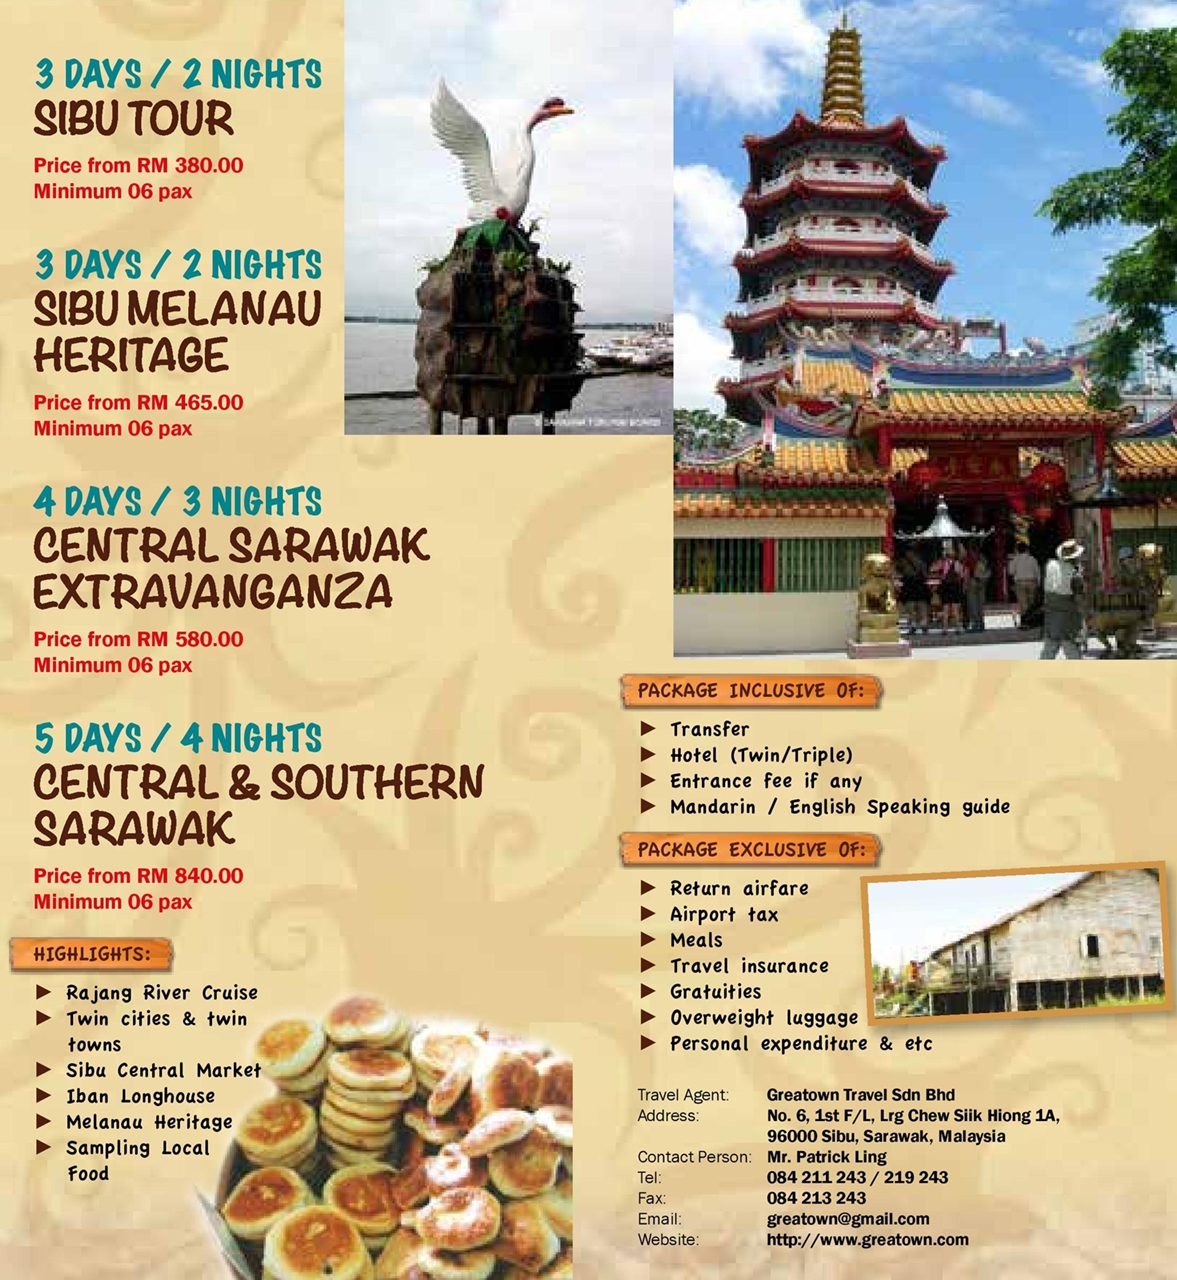 MATTA Fair March 2014 | Kayo-Kayo Sarawak Packages for Sibu